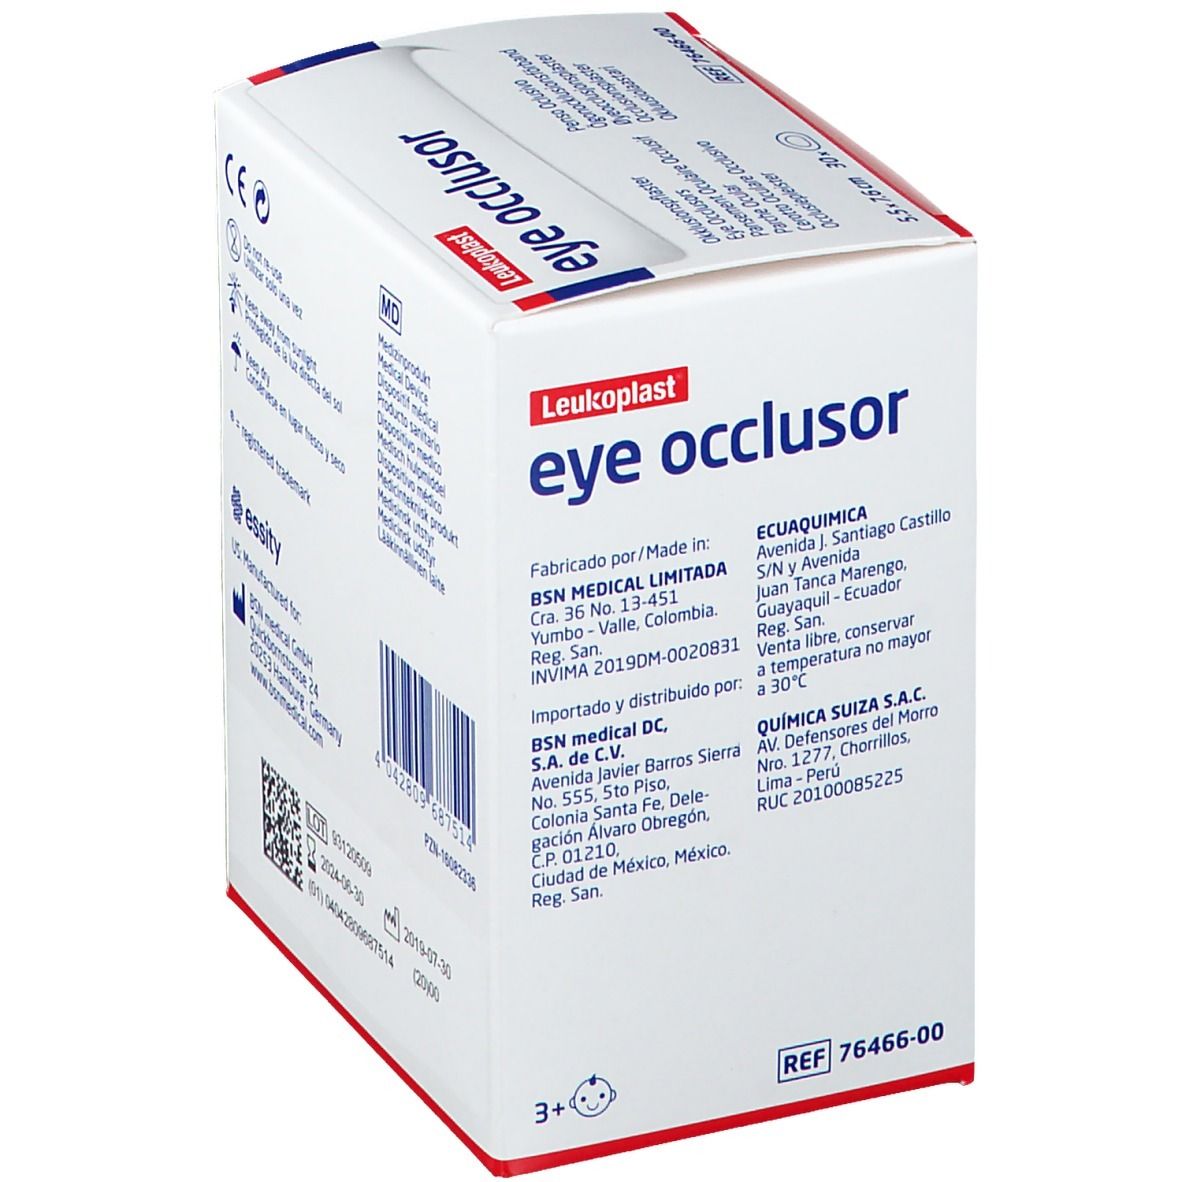 Leukoplast® eye occlusor Okklusionspflaster